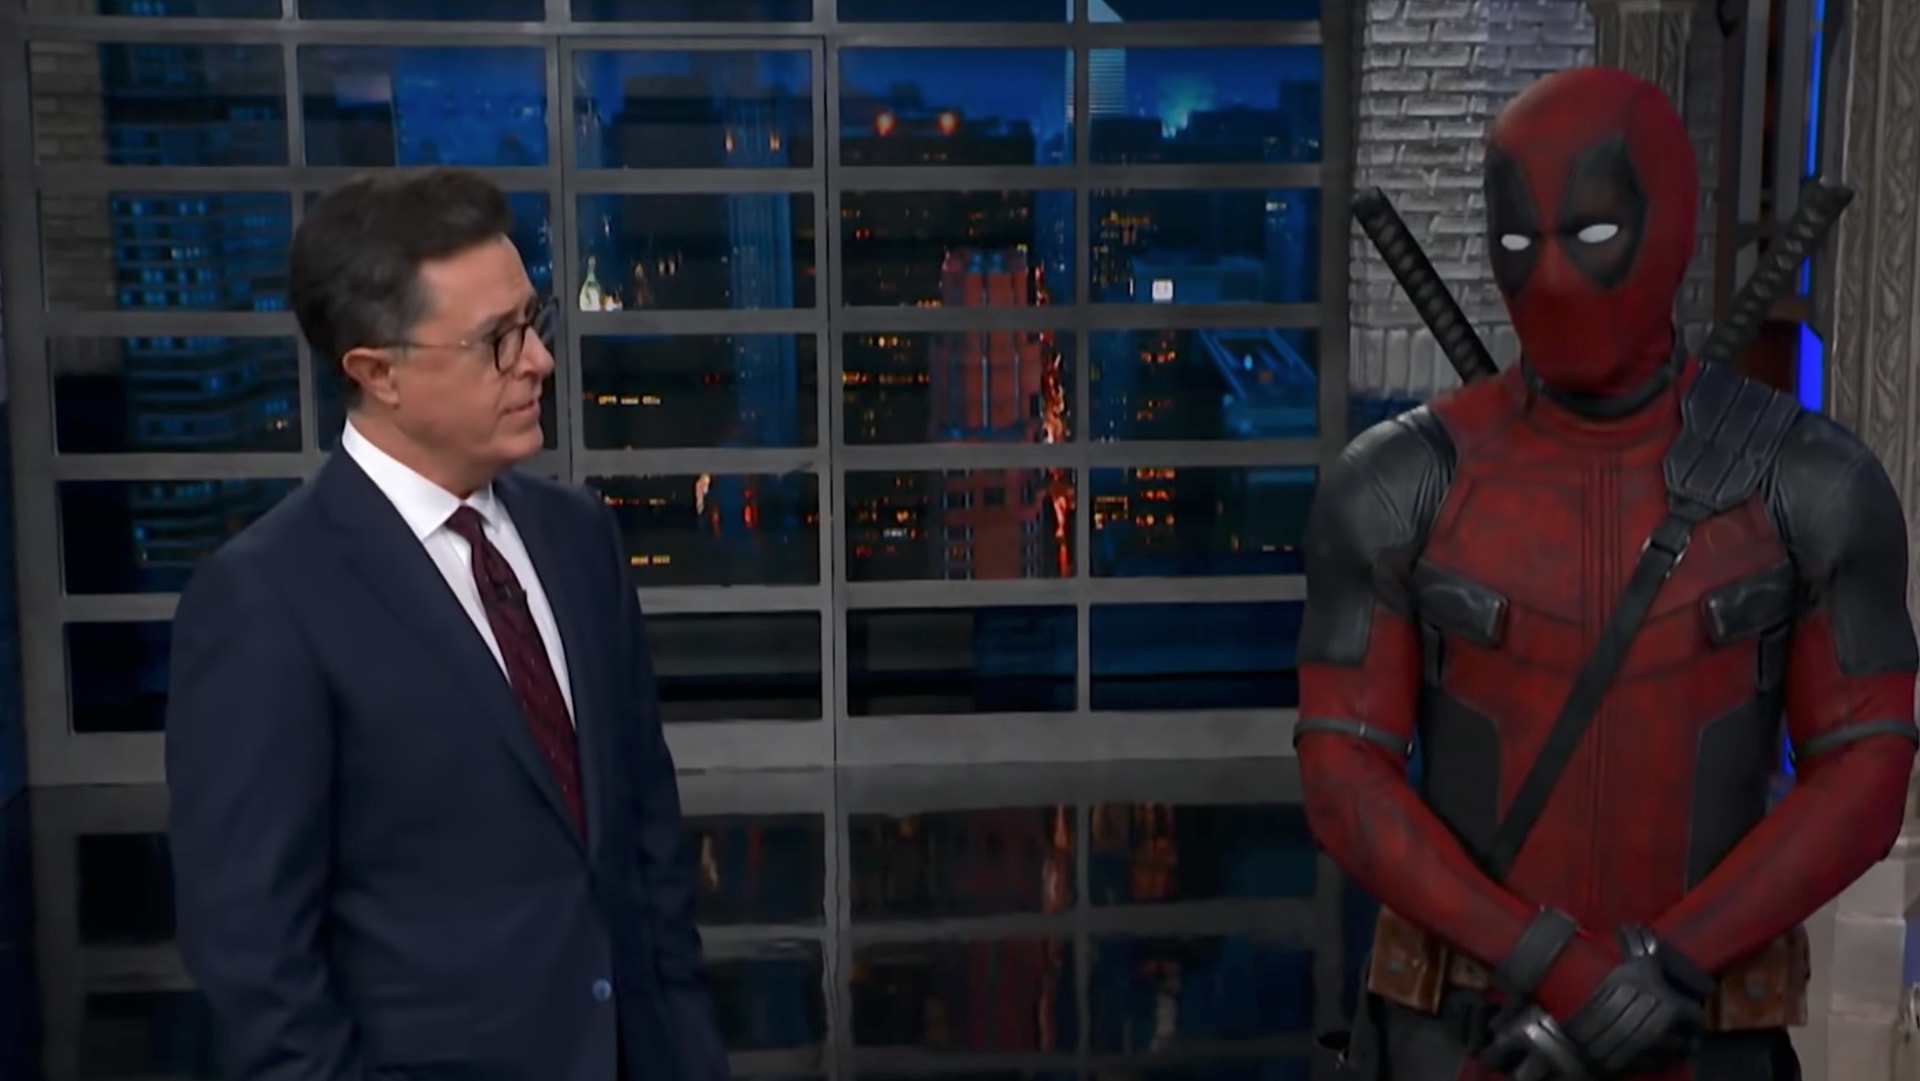 Deadpool interrupted Colbert’s monologue to do some Trump jokes